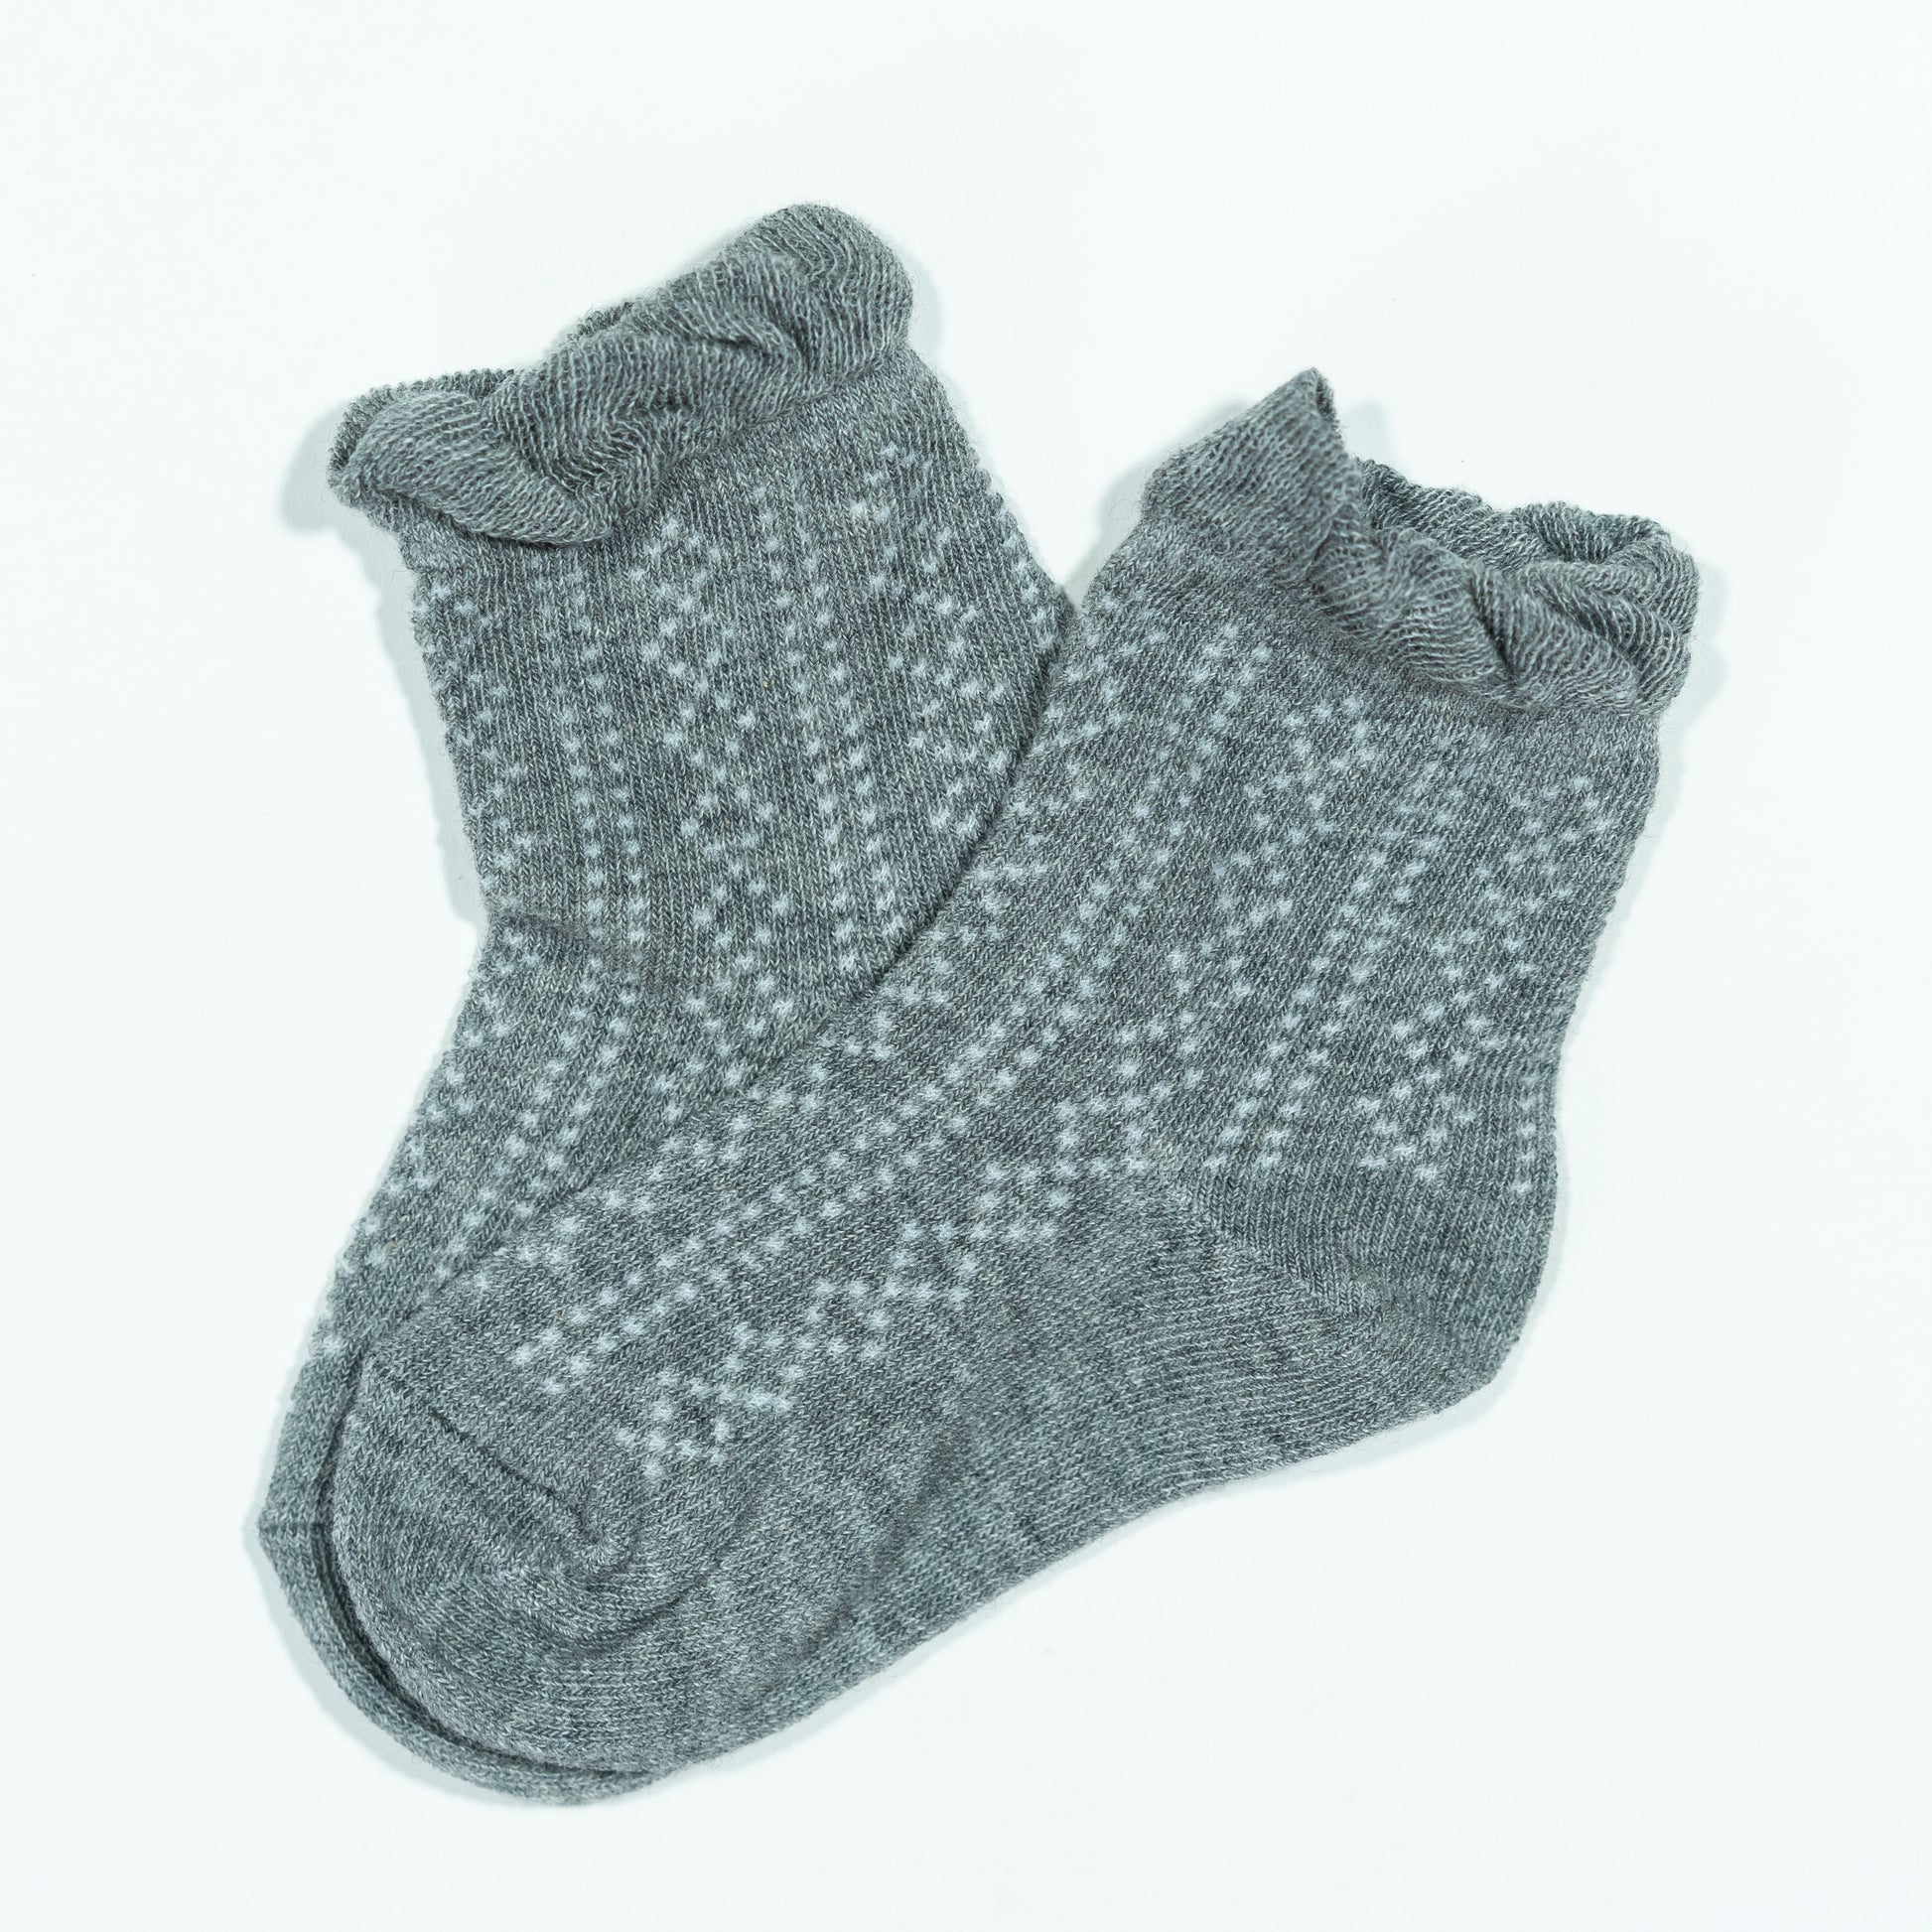 Ruffle Anklet Socks in Gray 0-6 months - Doodlebug's Children's Boutique